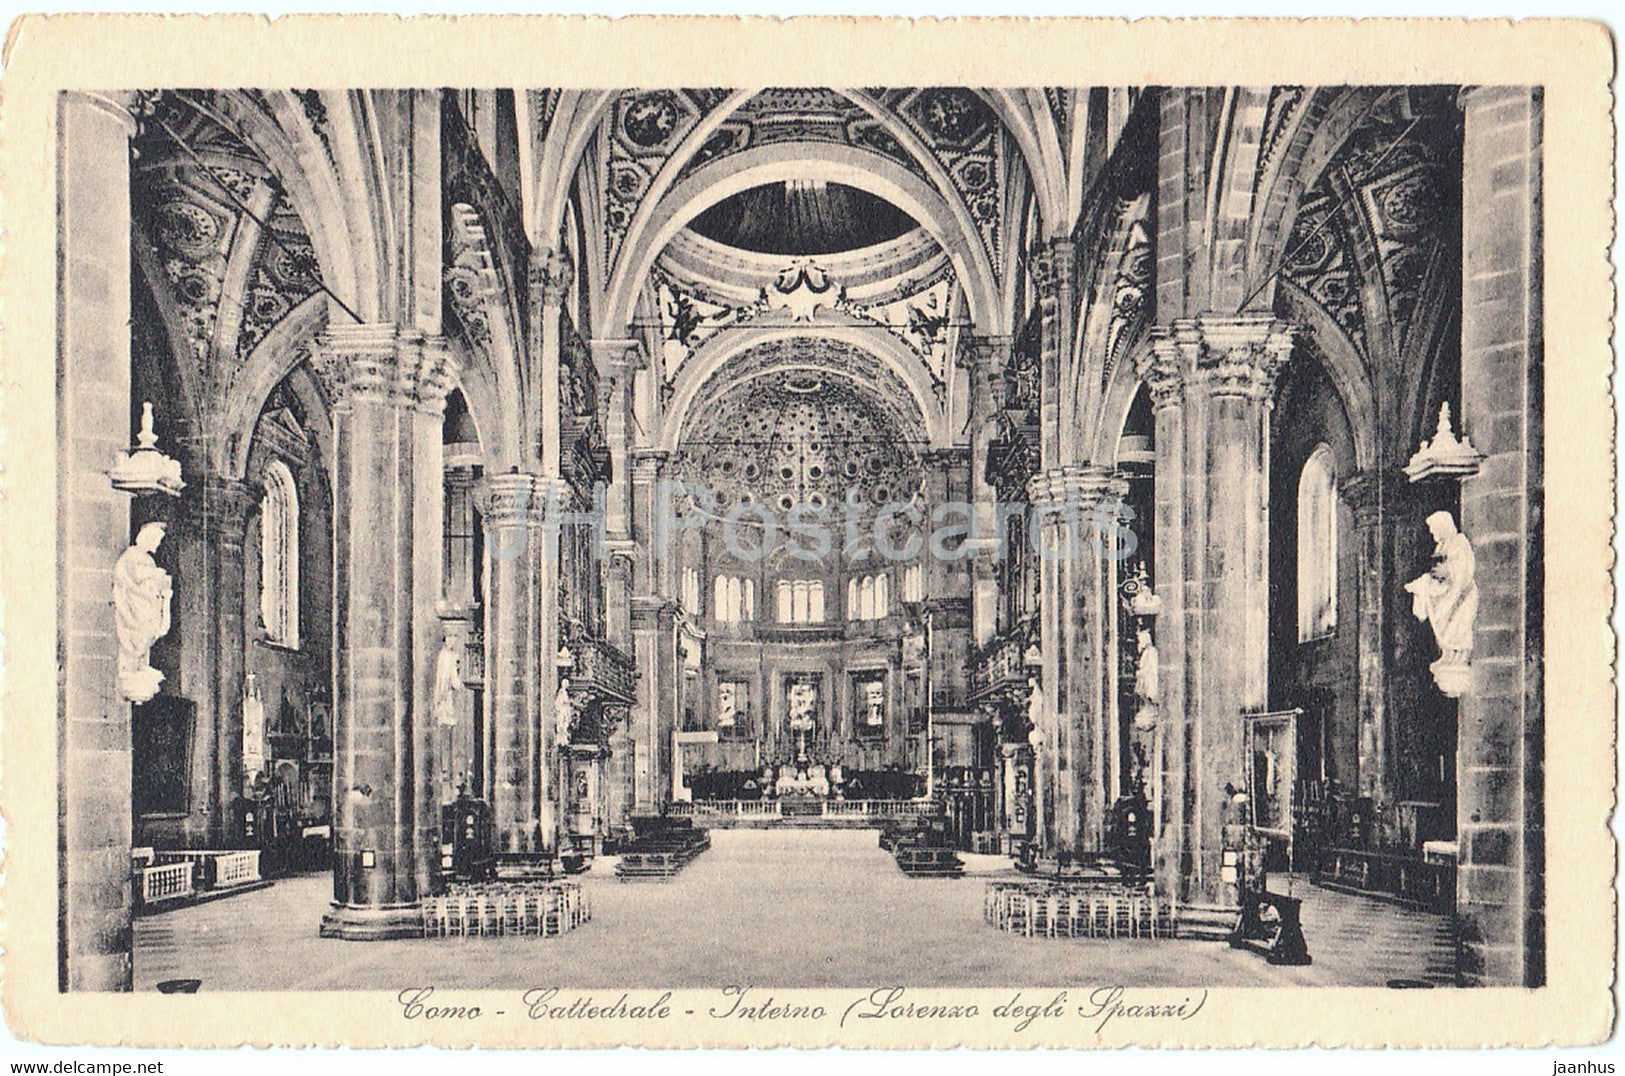 Como - Cattedrale - Interno - Lorenzo degli Spazzi - cathedral - old postcard - Italy - unused - JH Postcards